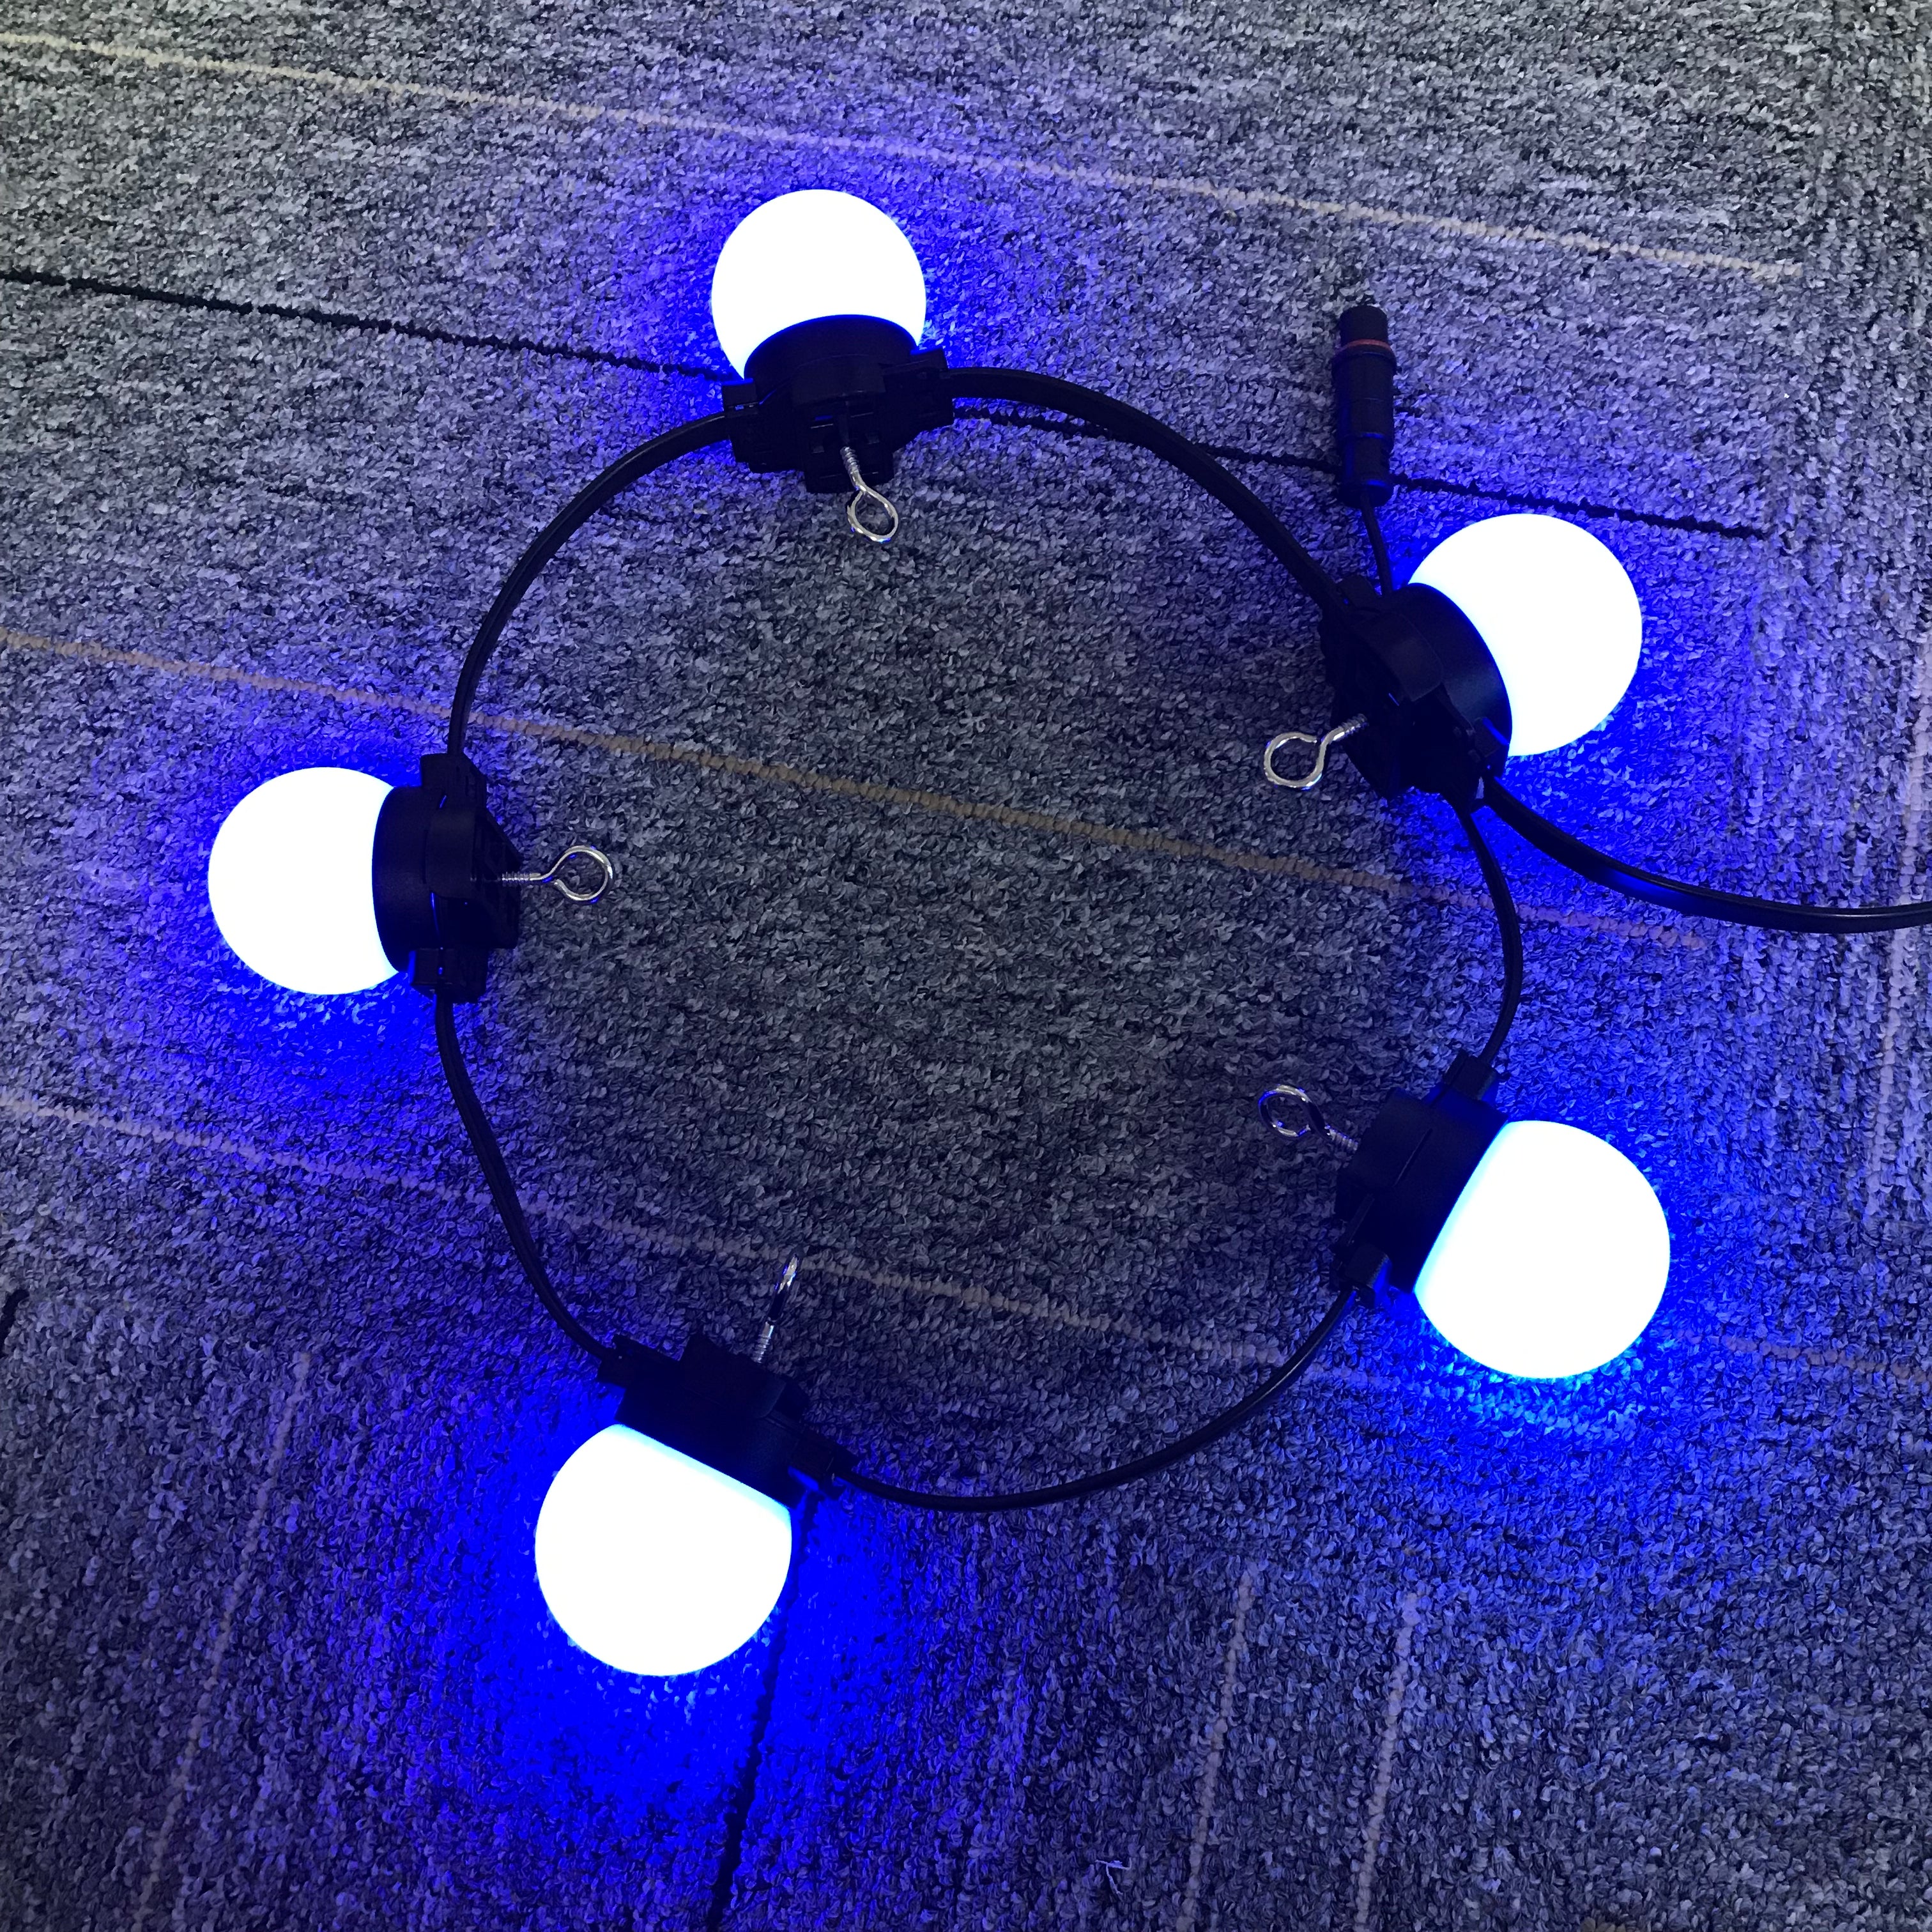 GlowGlobe LED String Lights - Enchanting Illumination for Every Occasion